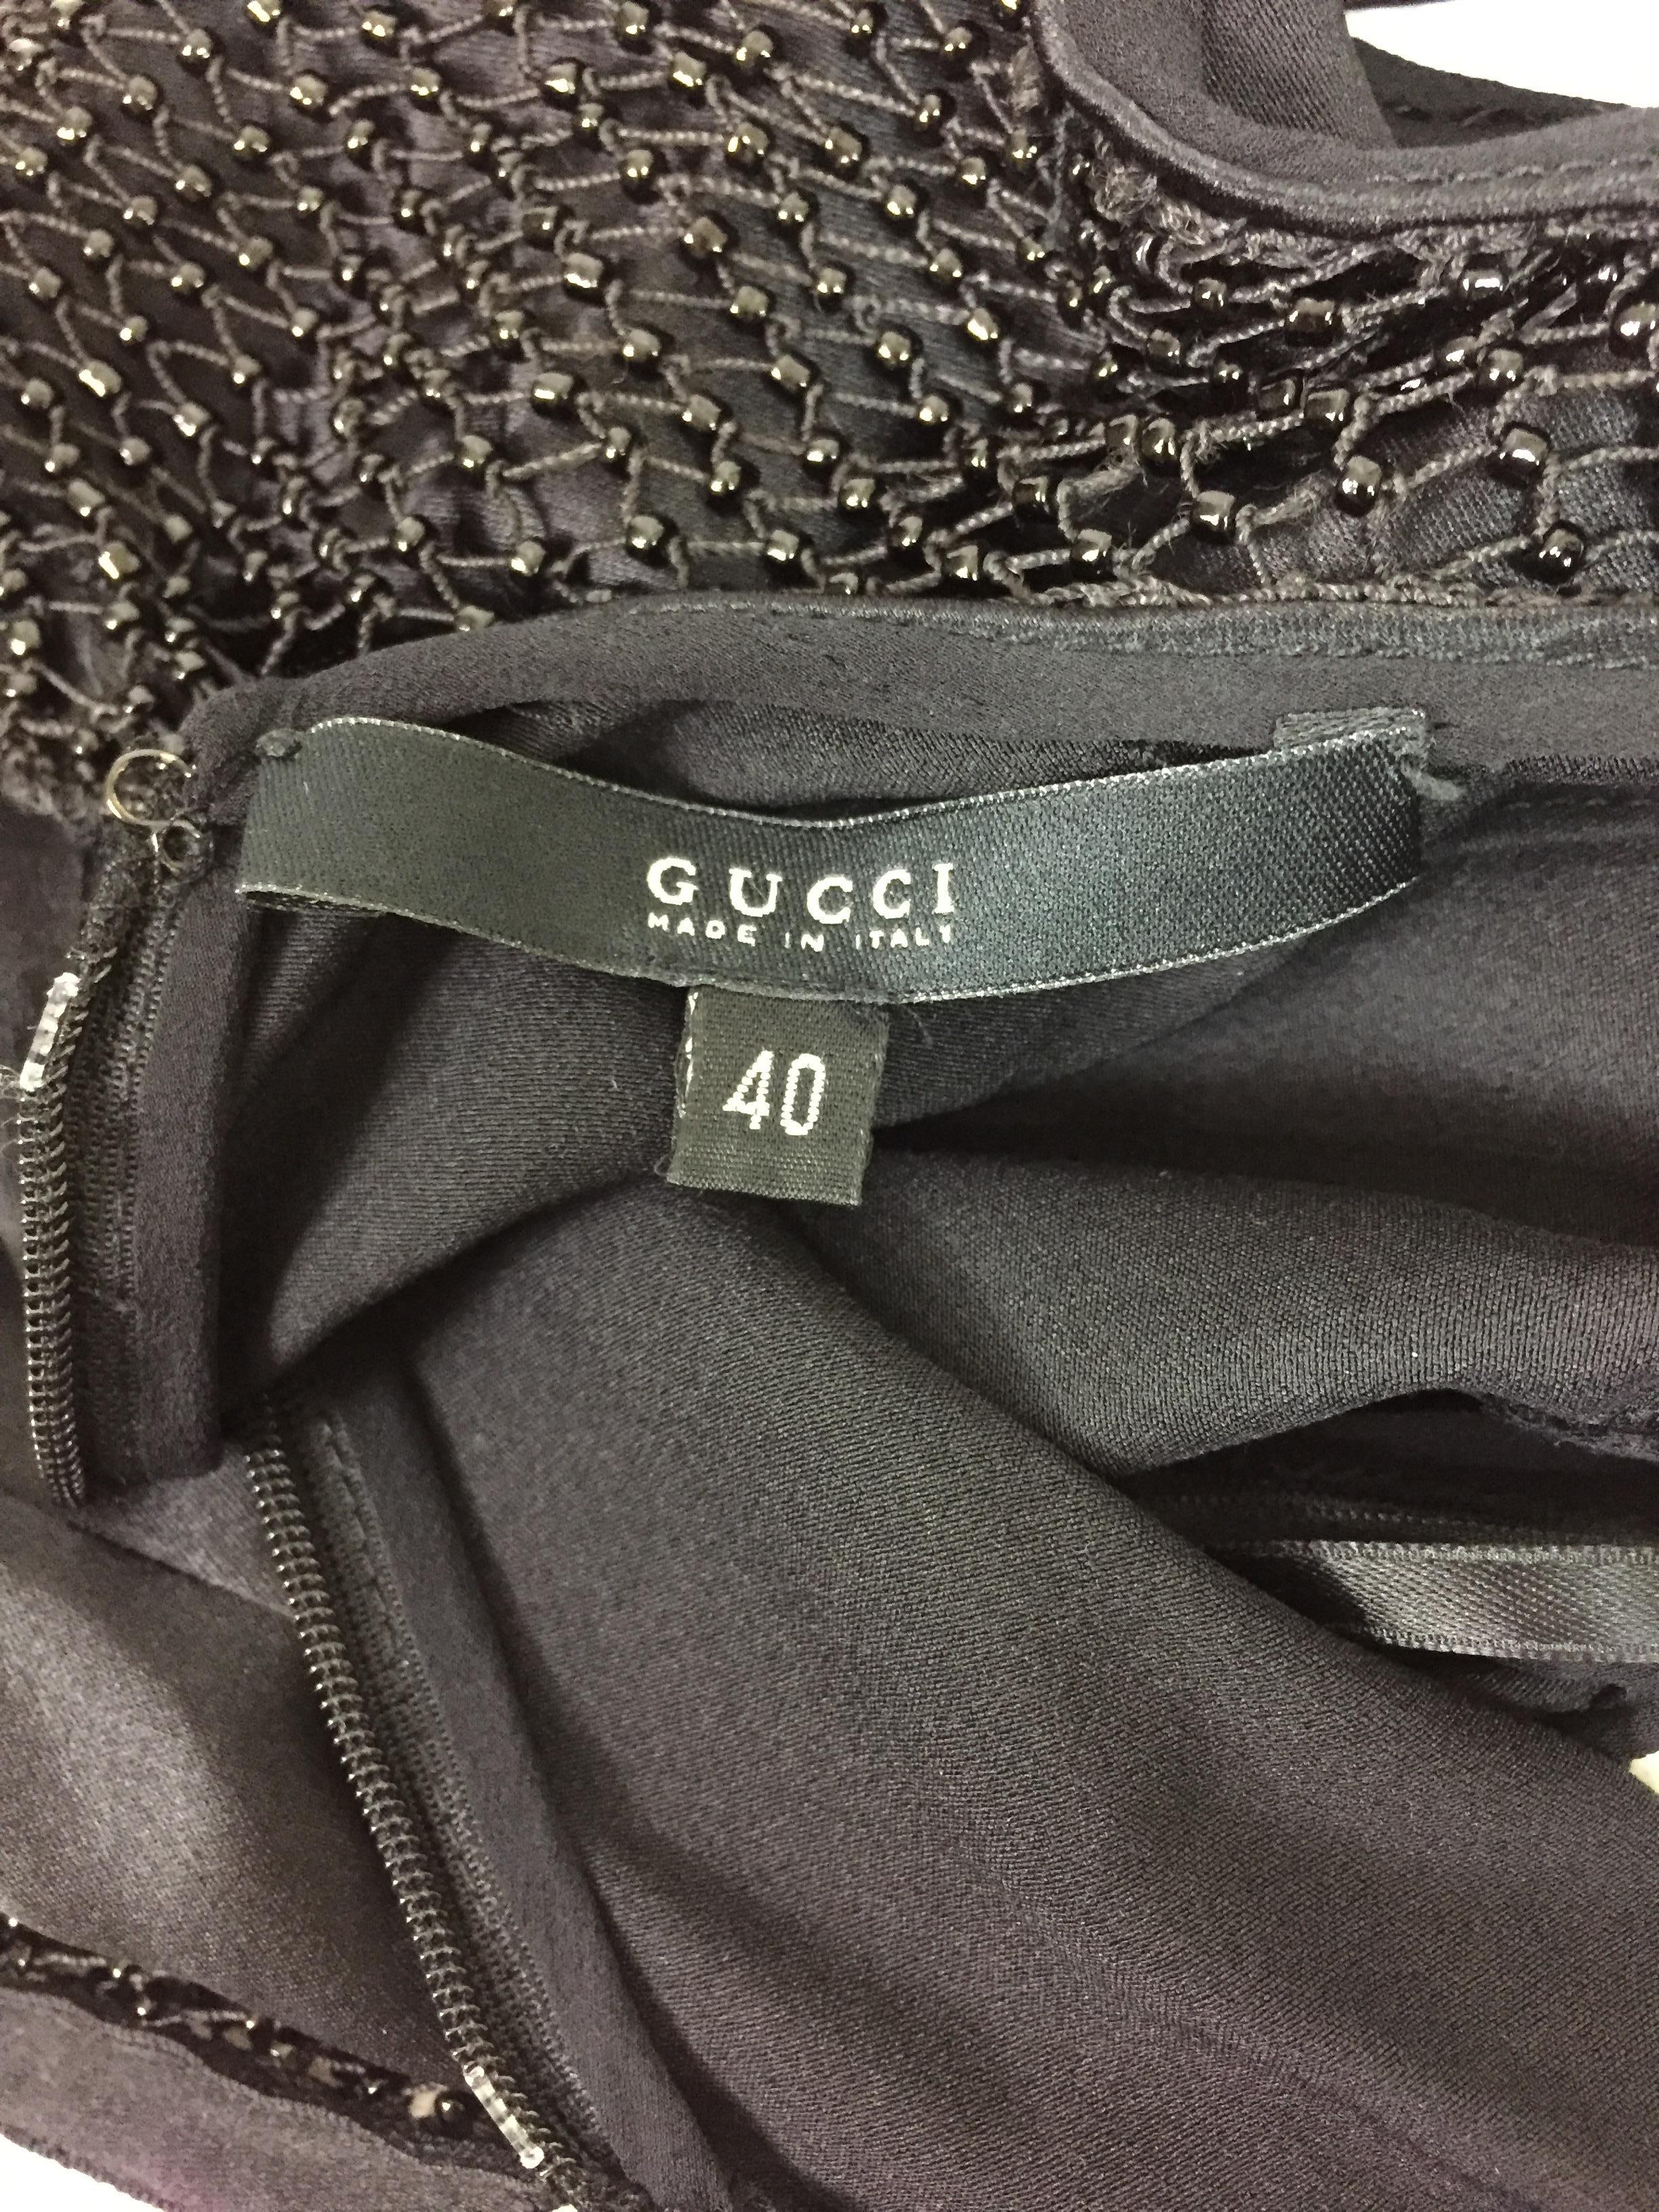 Women's F/W 2002 Gucci Tom Ford Runway 20's Flapper Plunging Black Beaded Mesh Dress